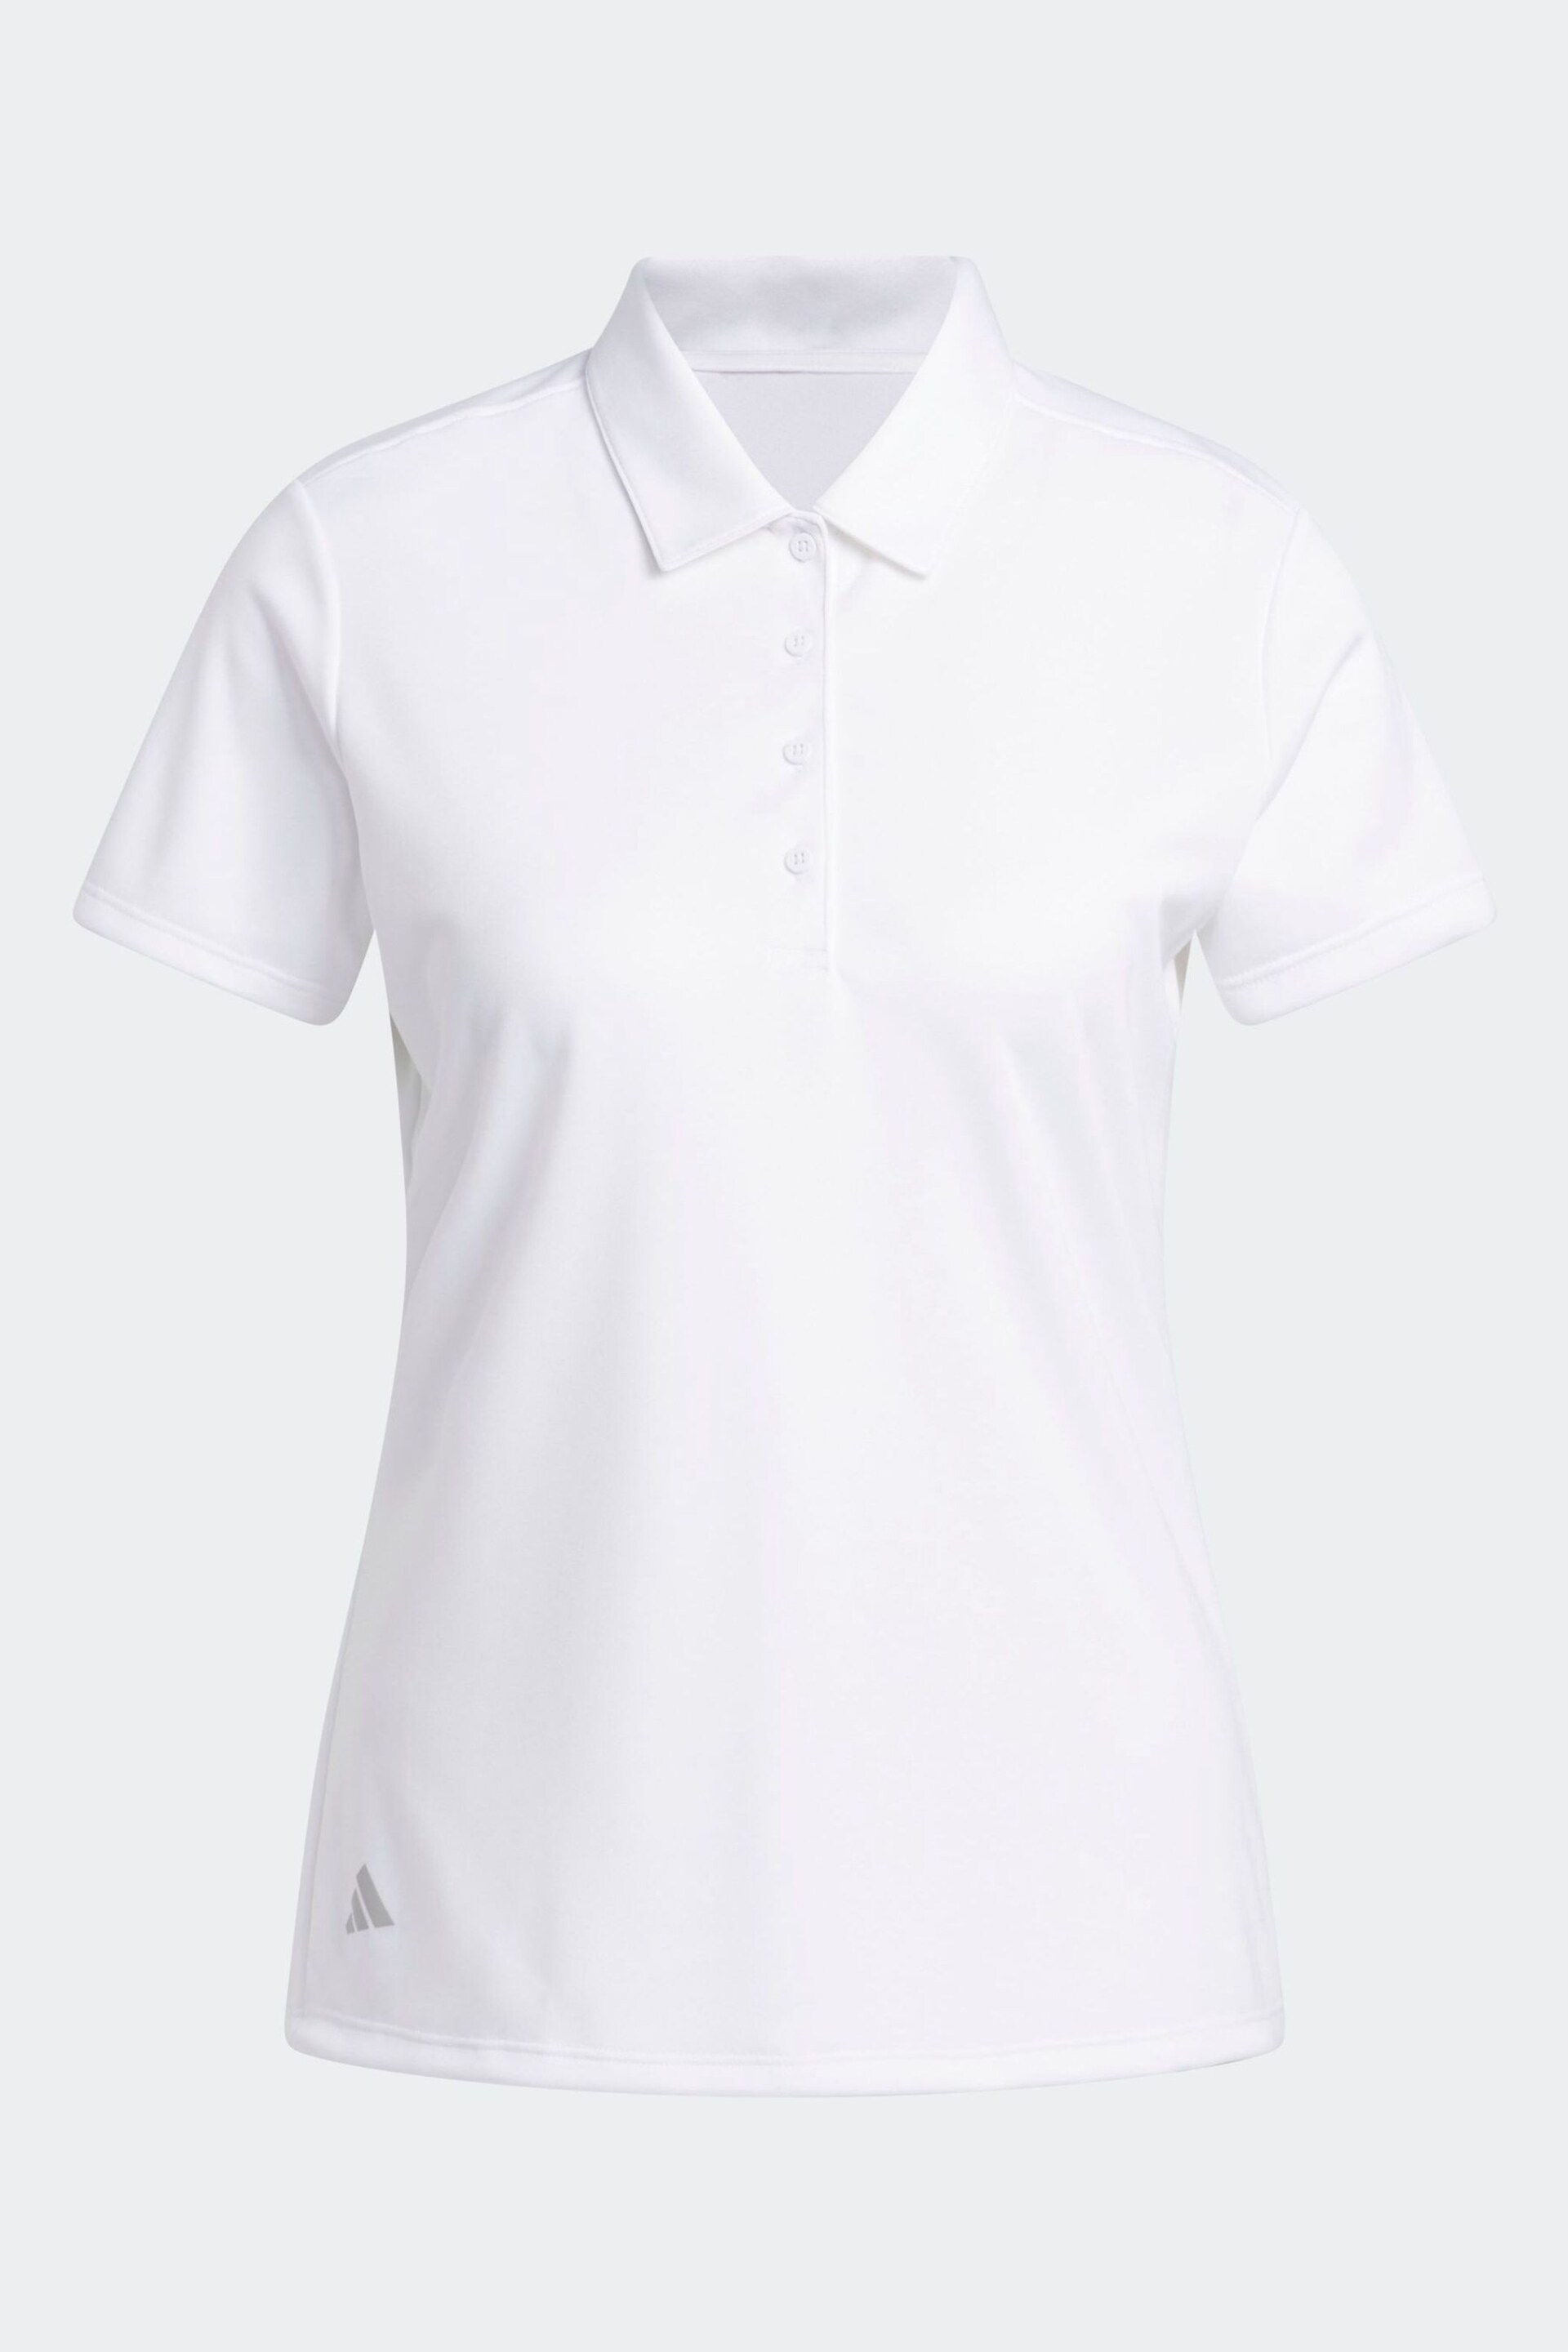 adidas Golf Womens Solid Short Sleeve Polo Shirt - Image 7 of 7